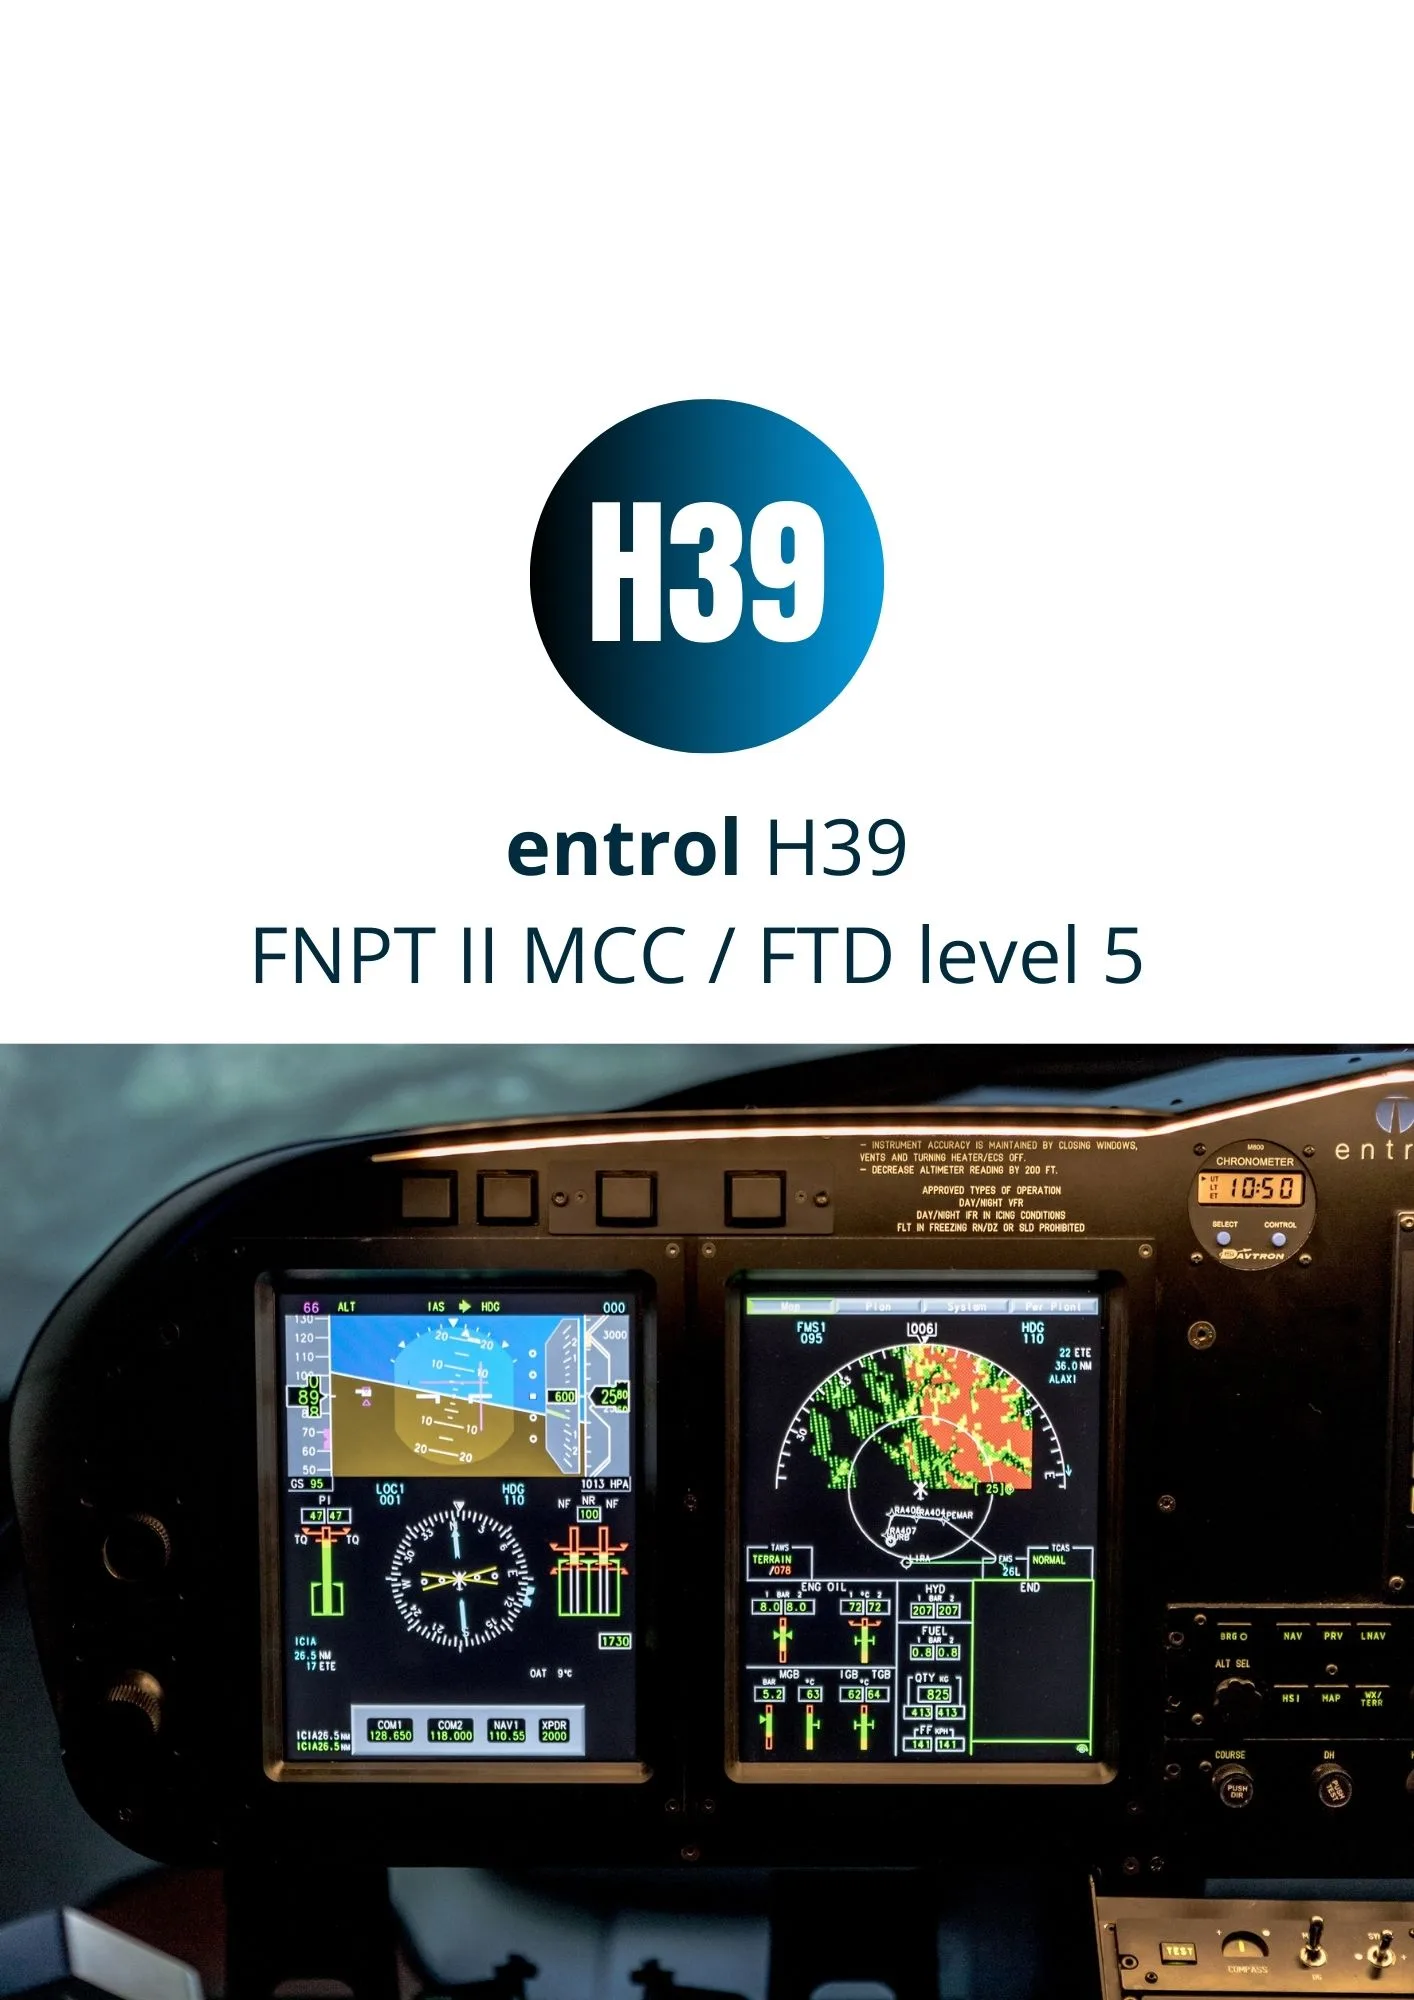 New entrol H39 FNPT II MCC for Turkemistan Airlines